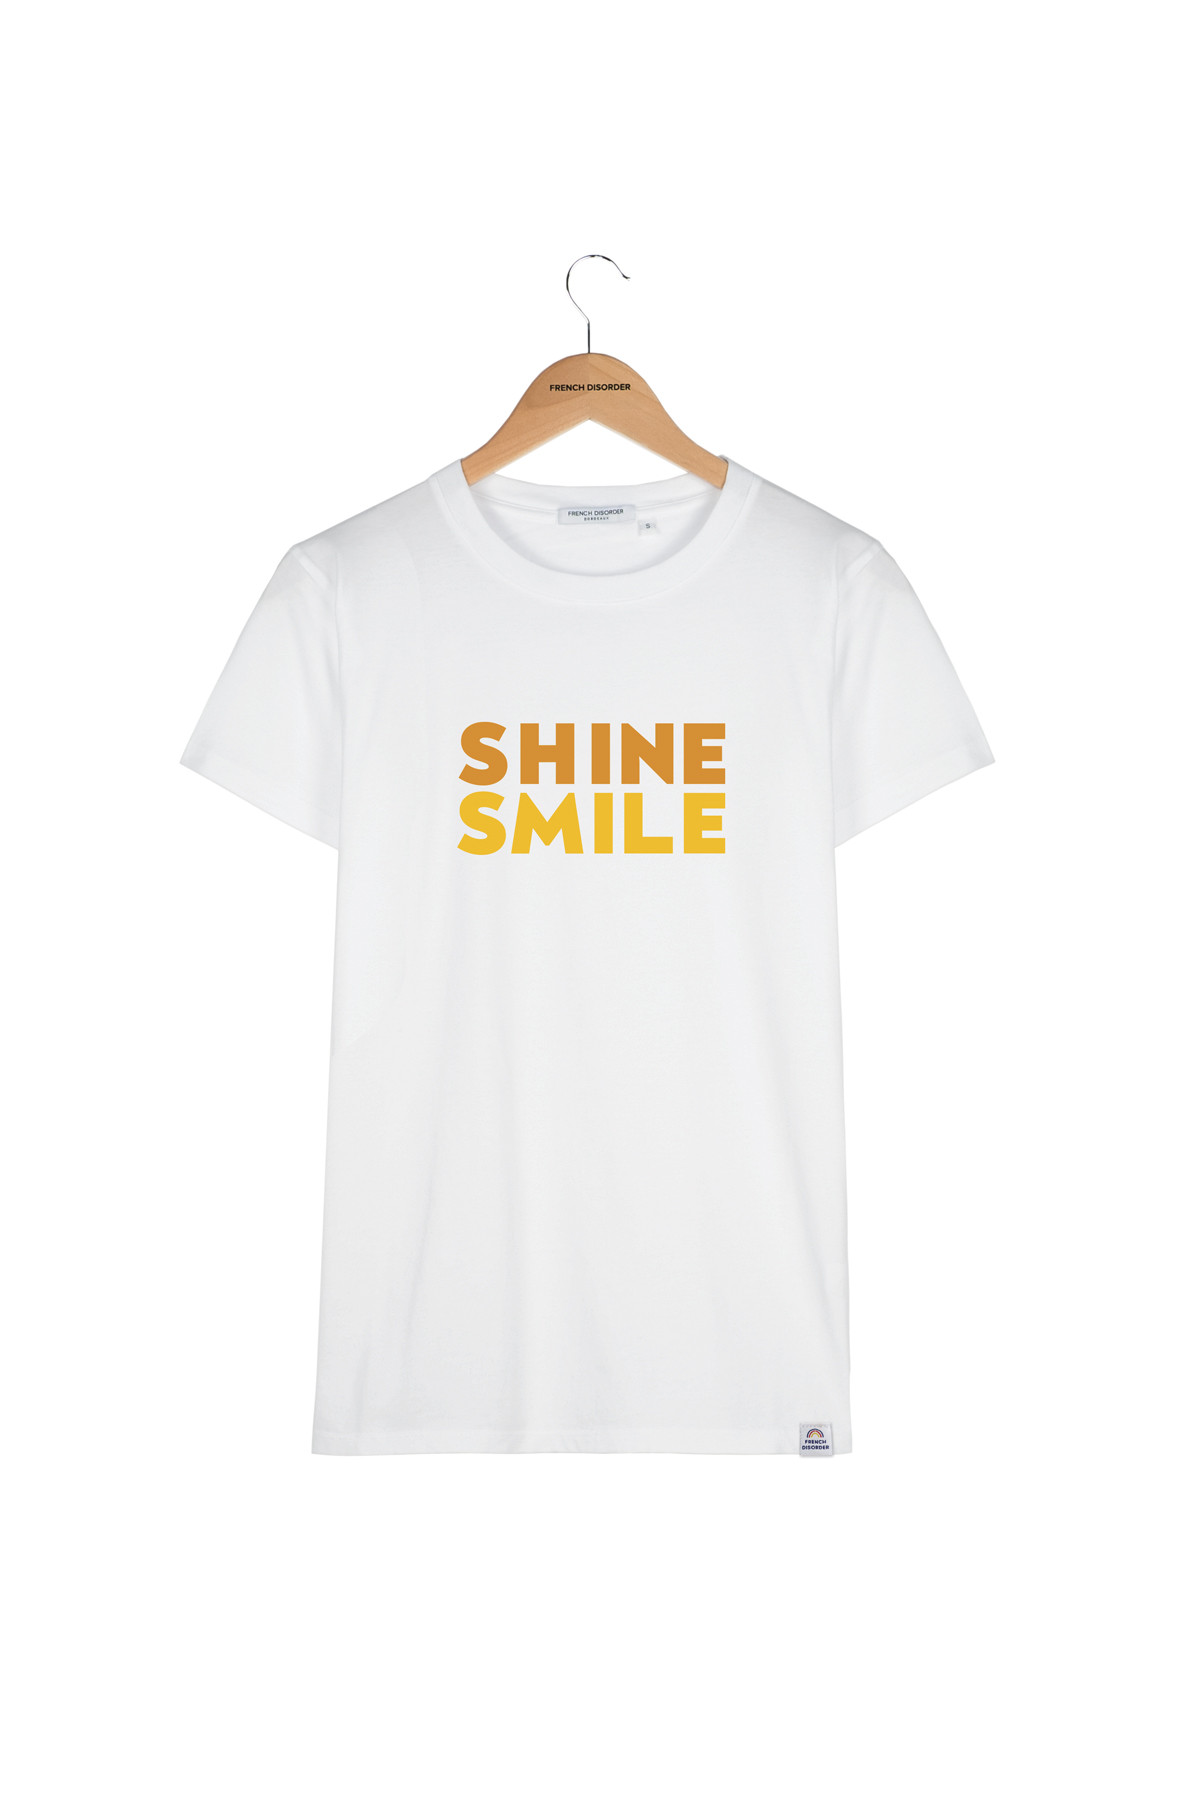 Tshirt SHINE SMILE French Disorder